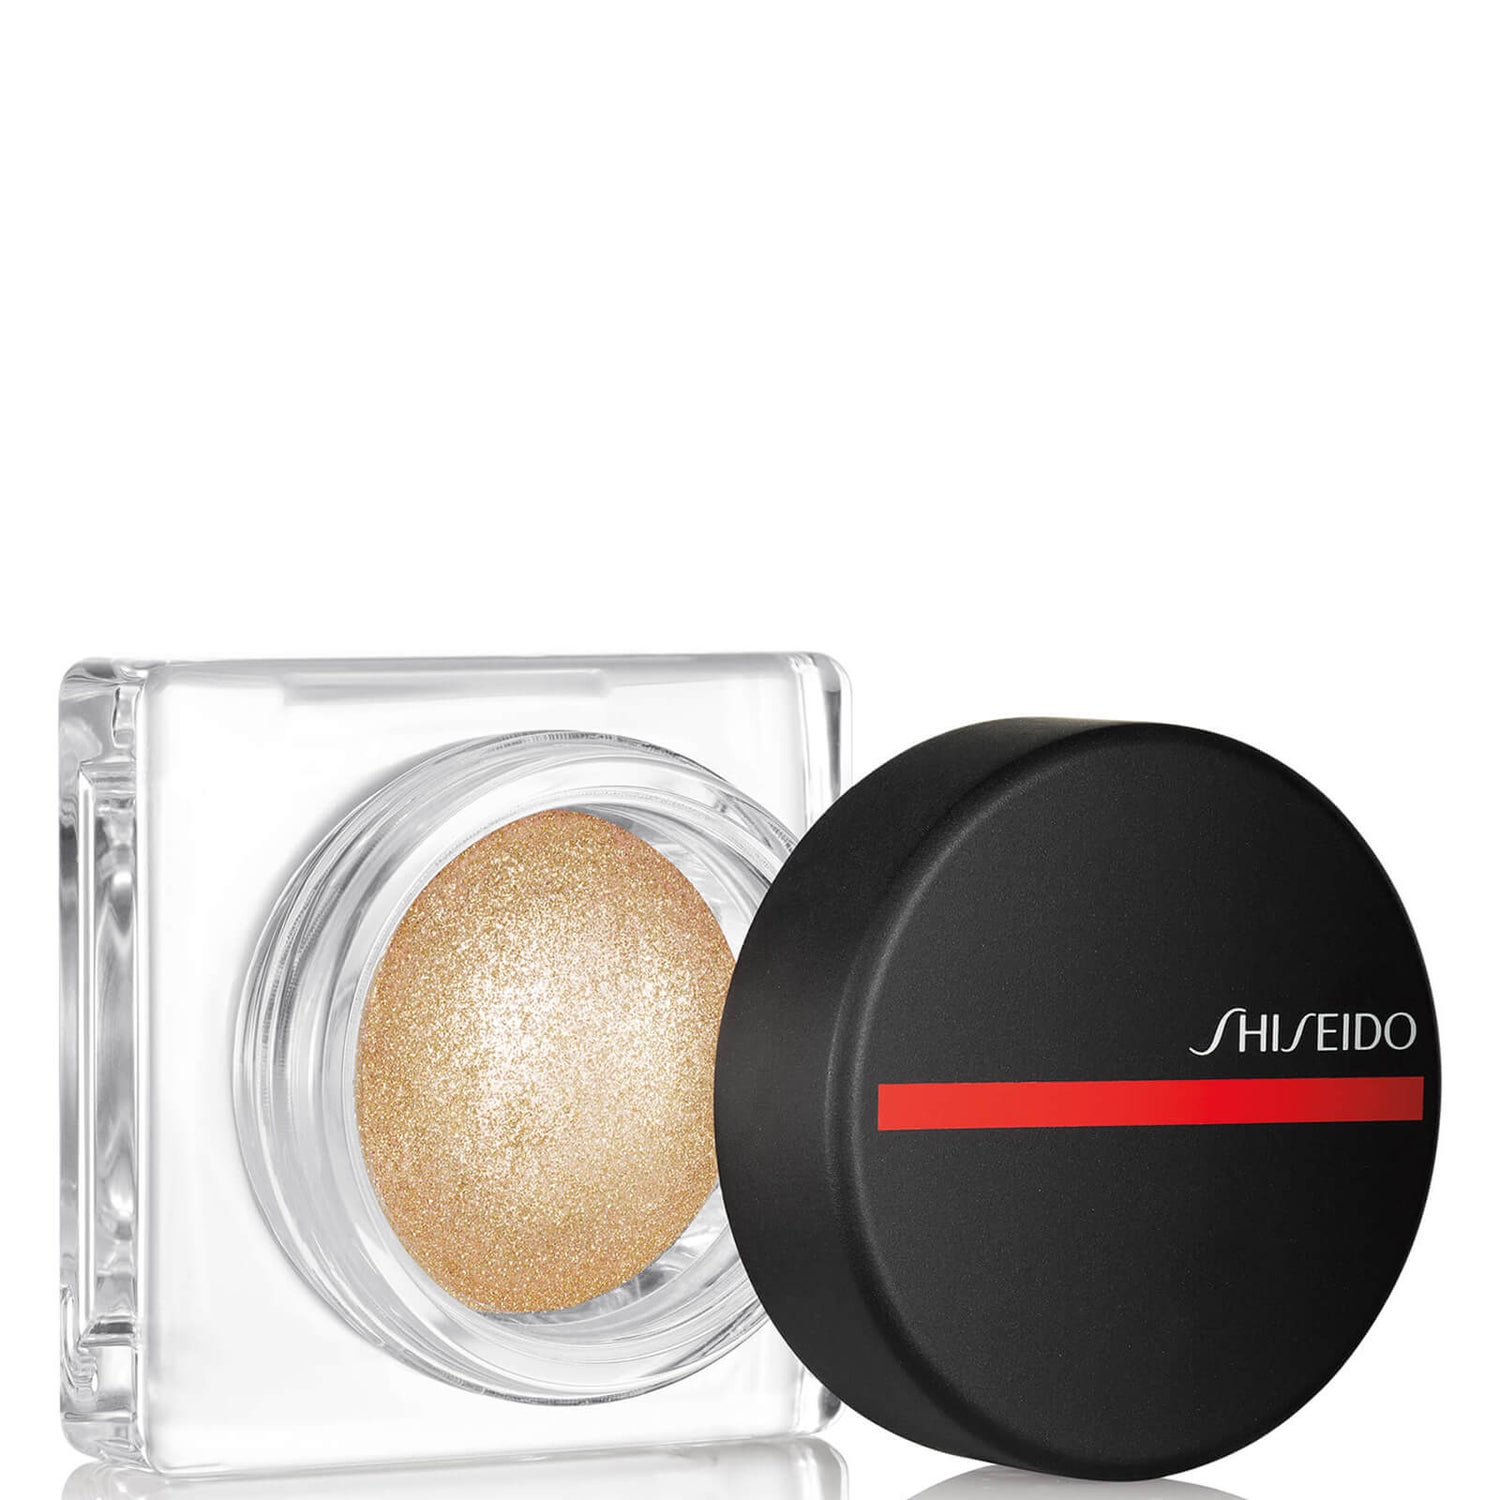 Aura Dew Shiseido (différentes teintes disponibles)